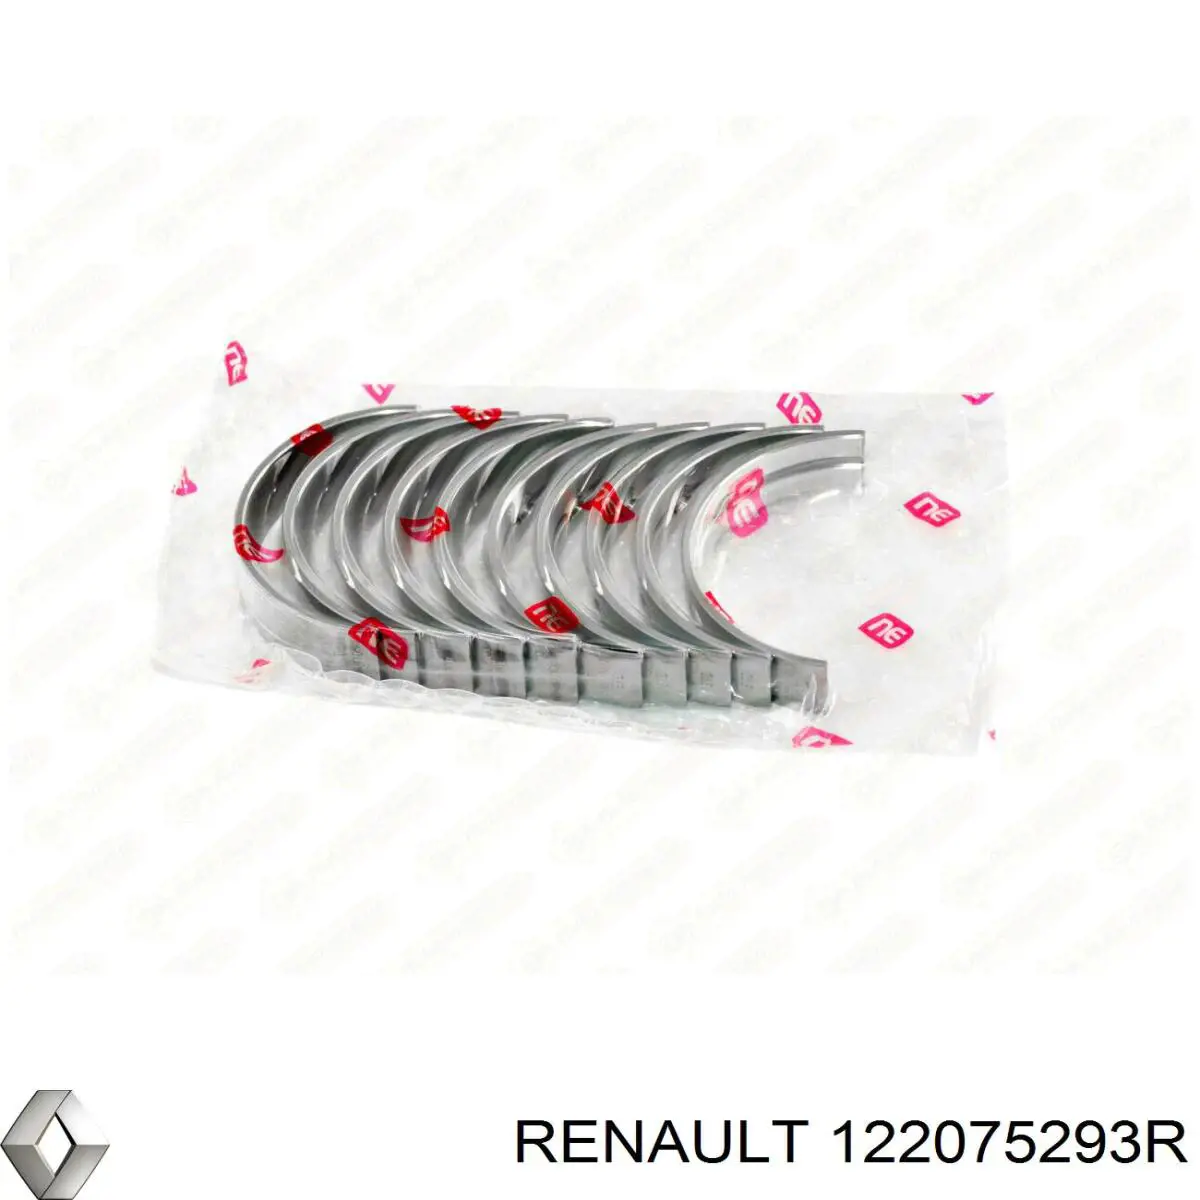 Вкладыши коленвала коренные, комплект, стандарт (STD) Renault (RVI) 122075293R